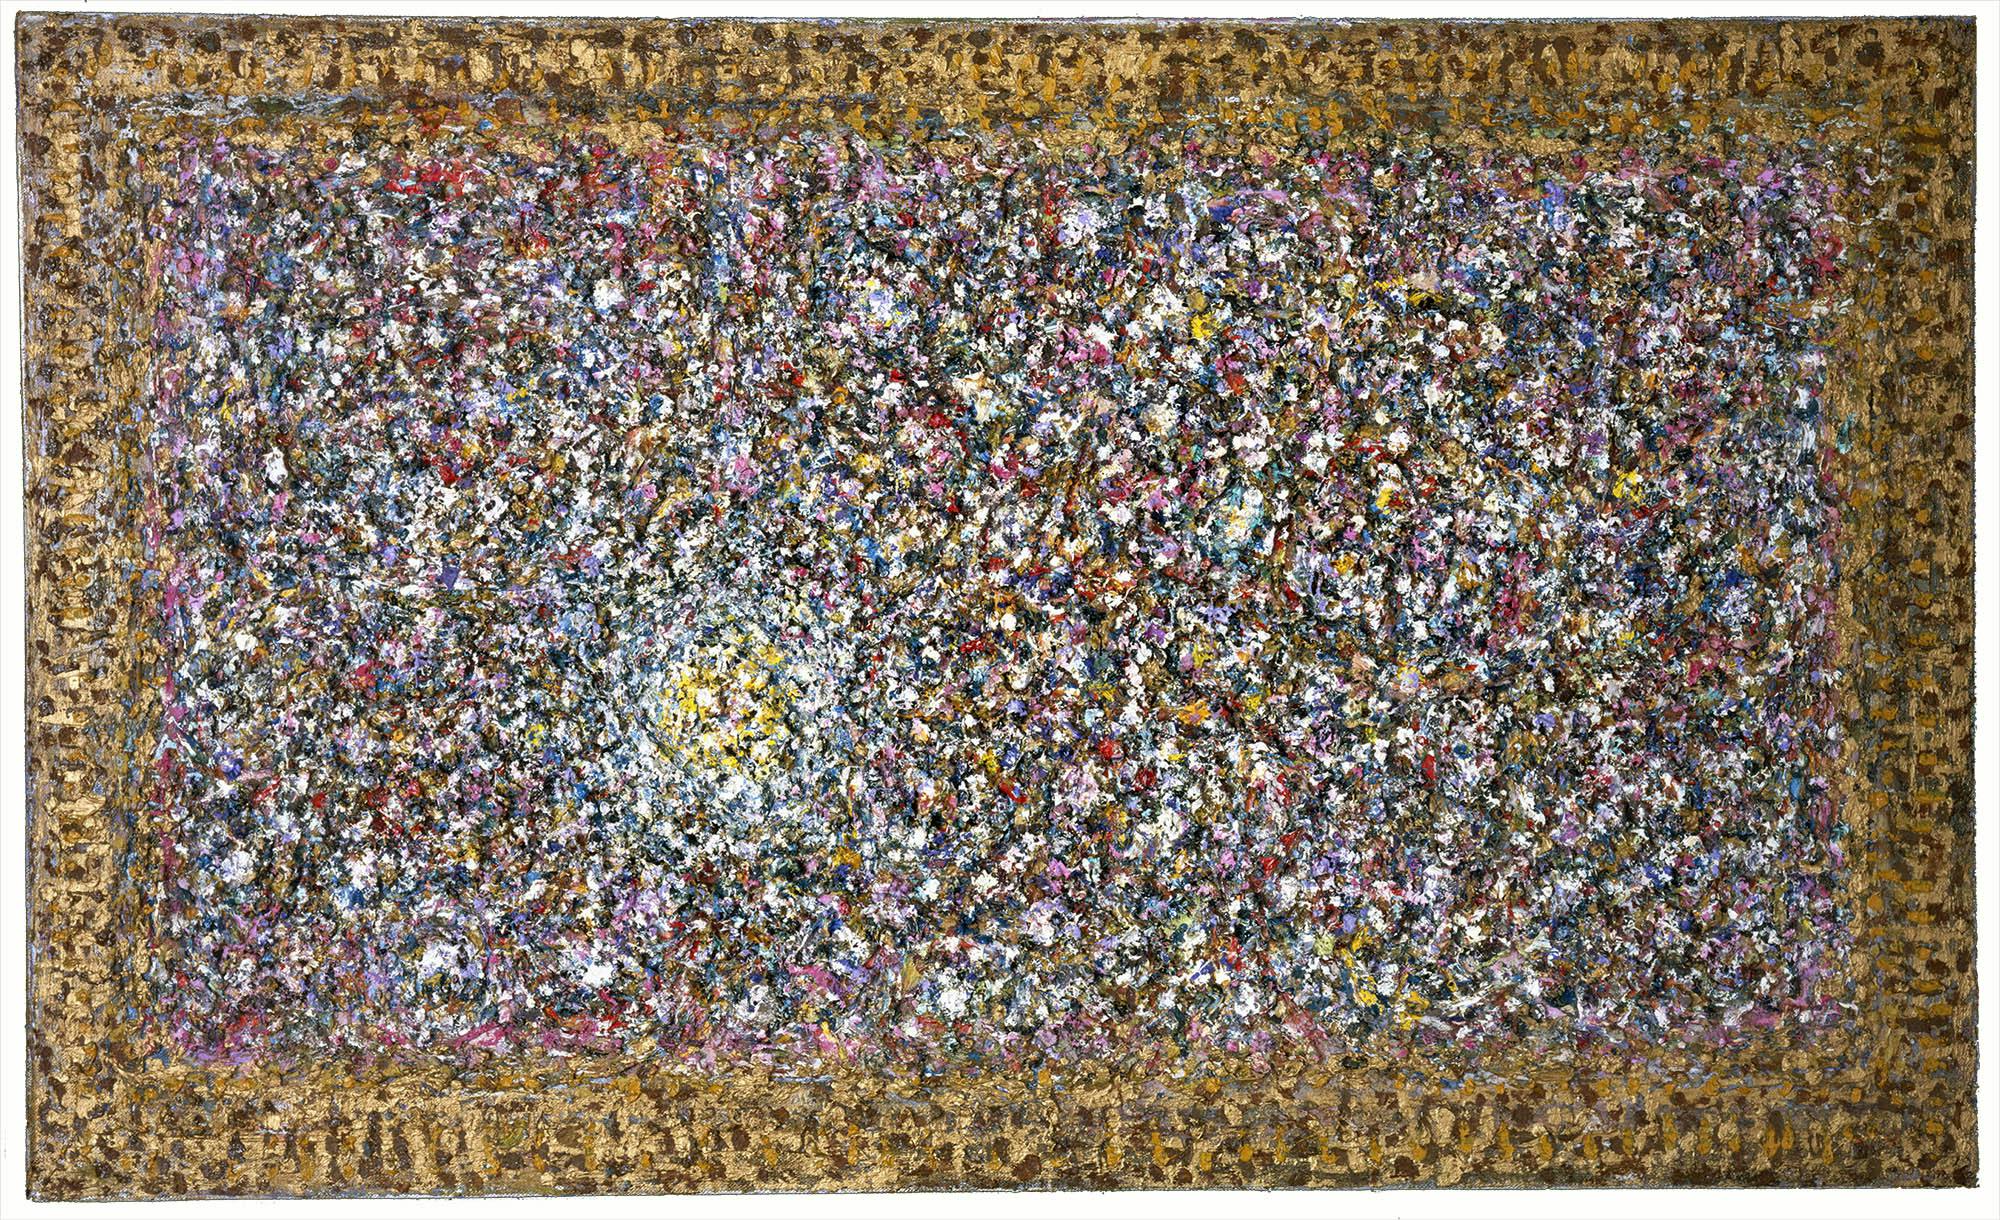 Touchstone (Golden Edge)
1962
Oil on canvas
20 x 40 in. (50.8 x 101.6 cm)
 – The Richard Pousette-Dart Foundation